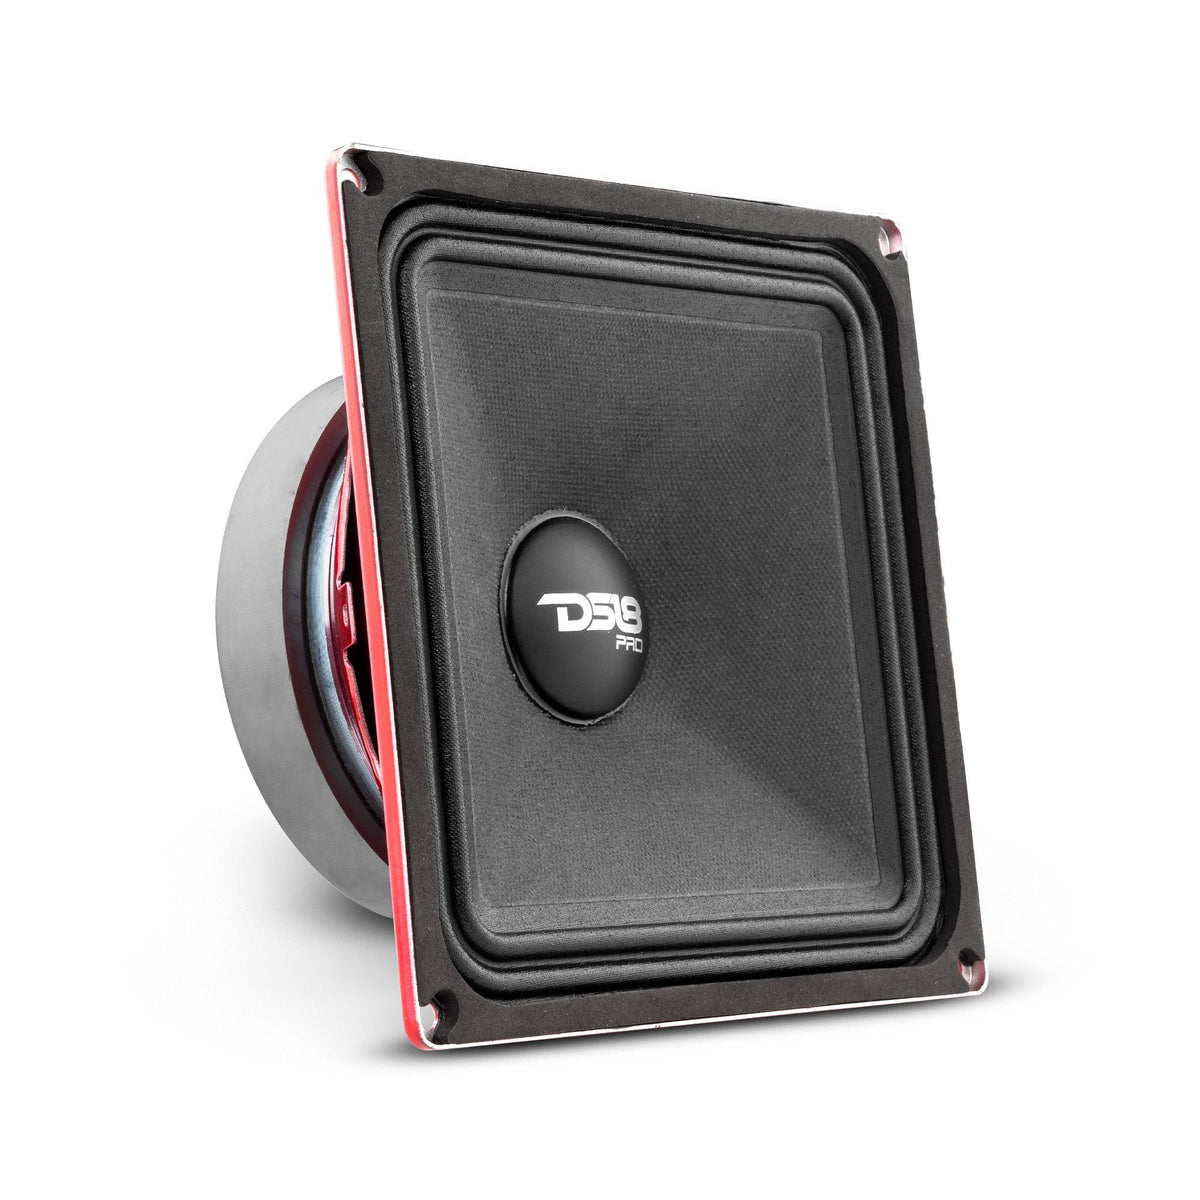 DS18 PRO 6.5x6.5" Square Midrange Loudspeaker 500 Watts 4-Ohms Pro audio cars home systems midrange speakers